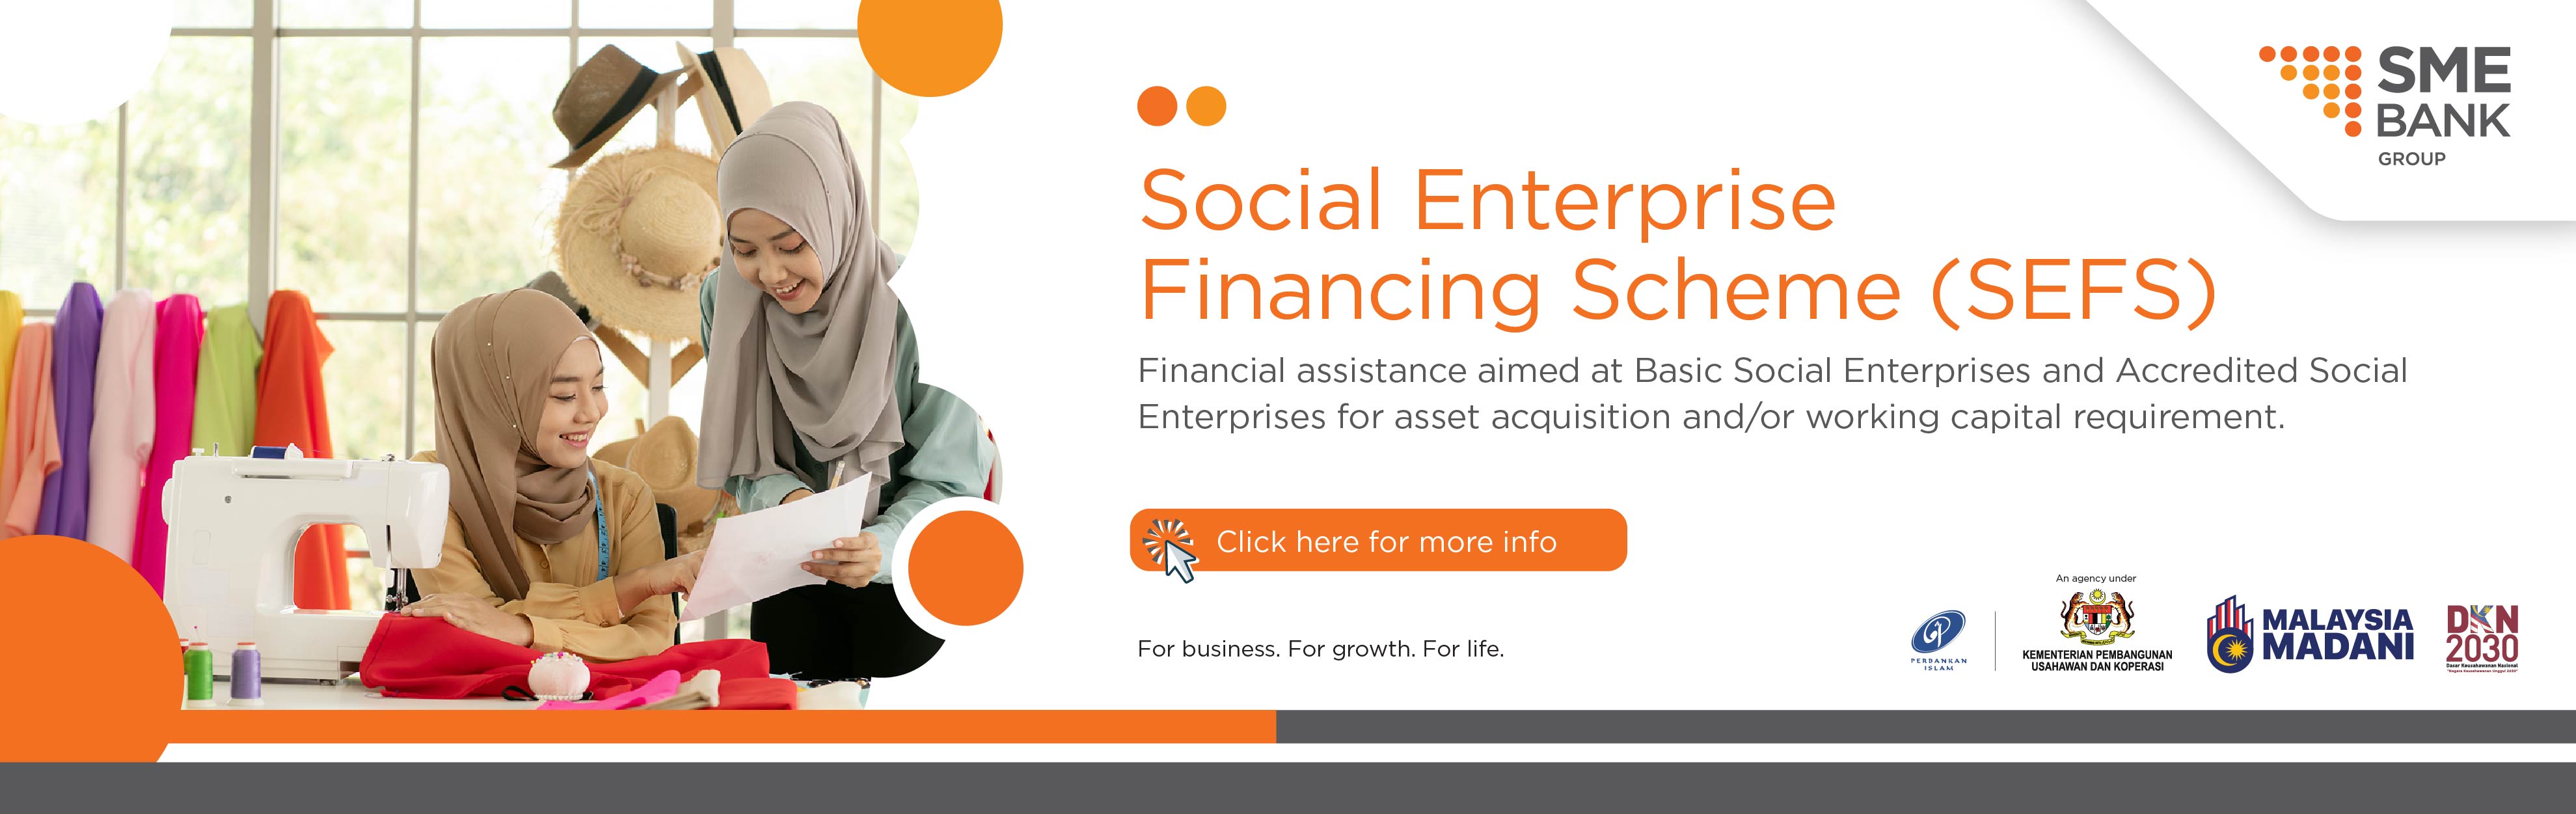 Social Enterprise Financing Scheme (SEFS)